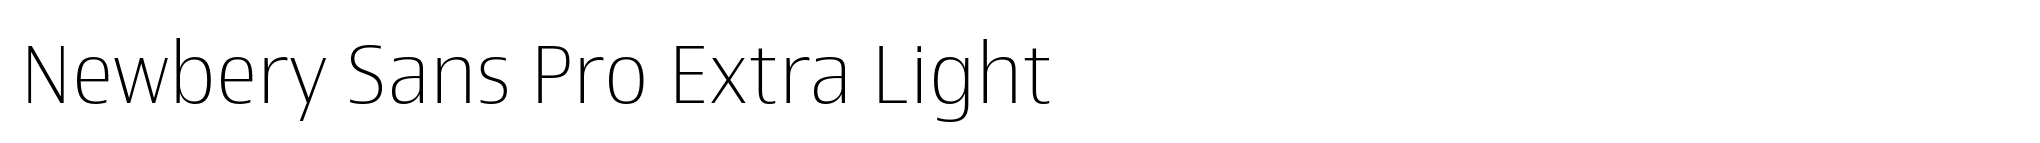 Newbery Sans Pro Extra Light image